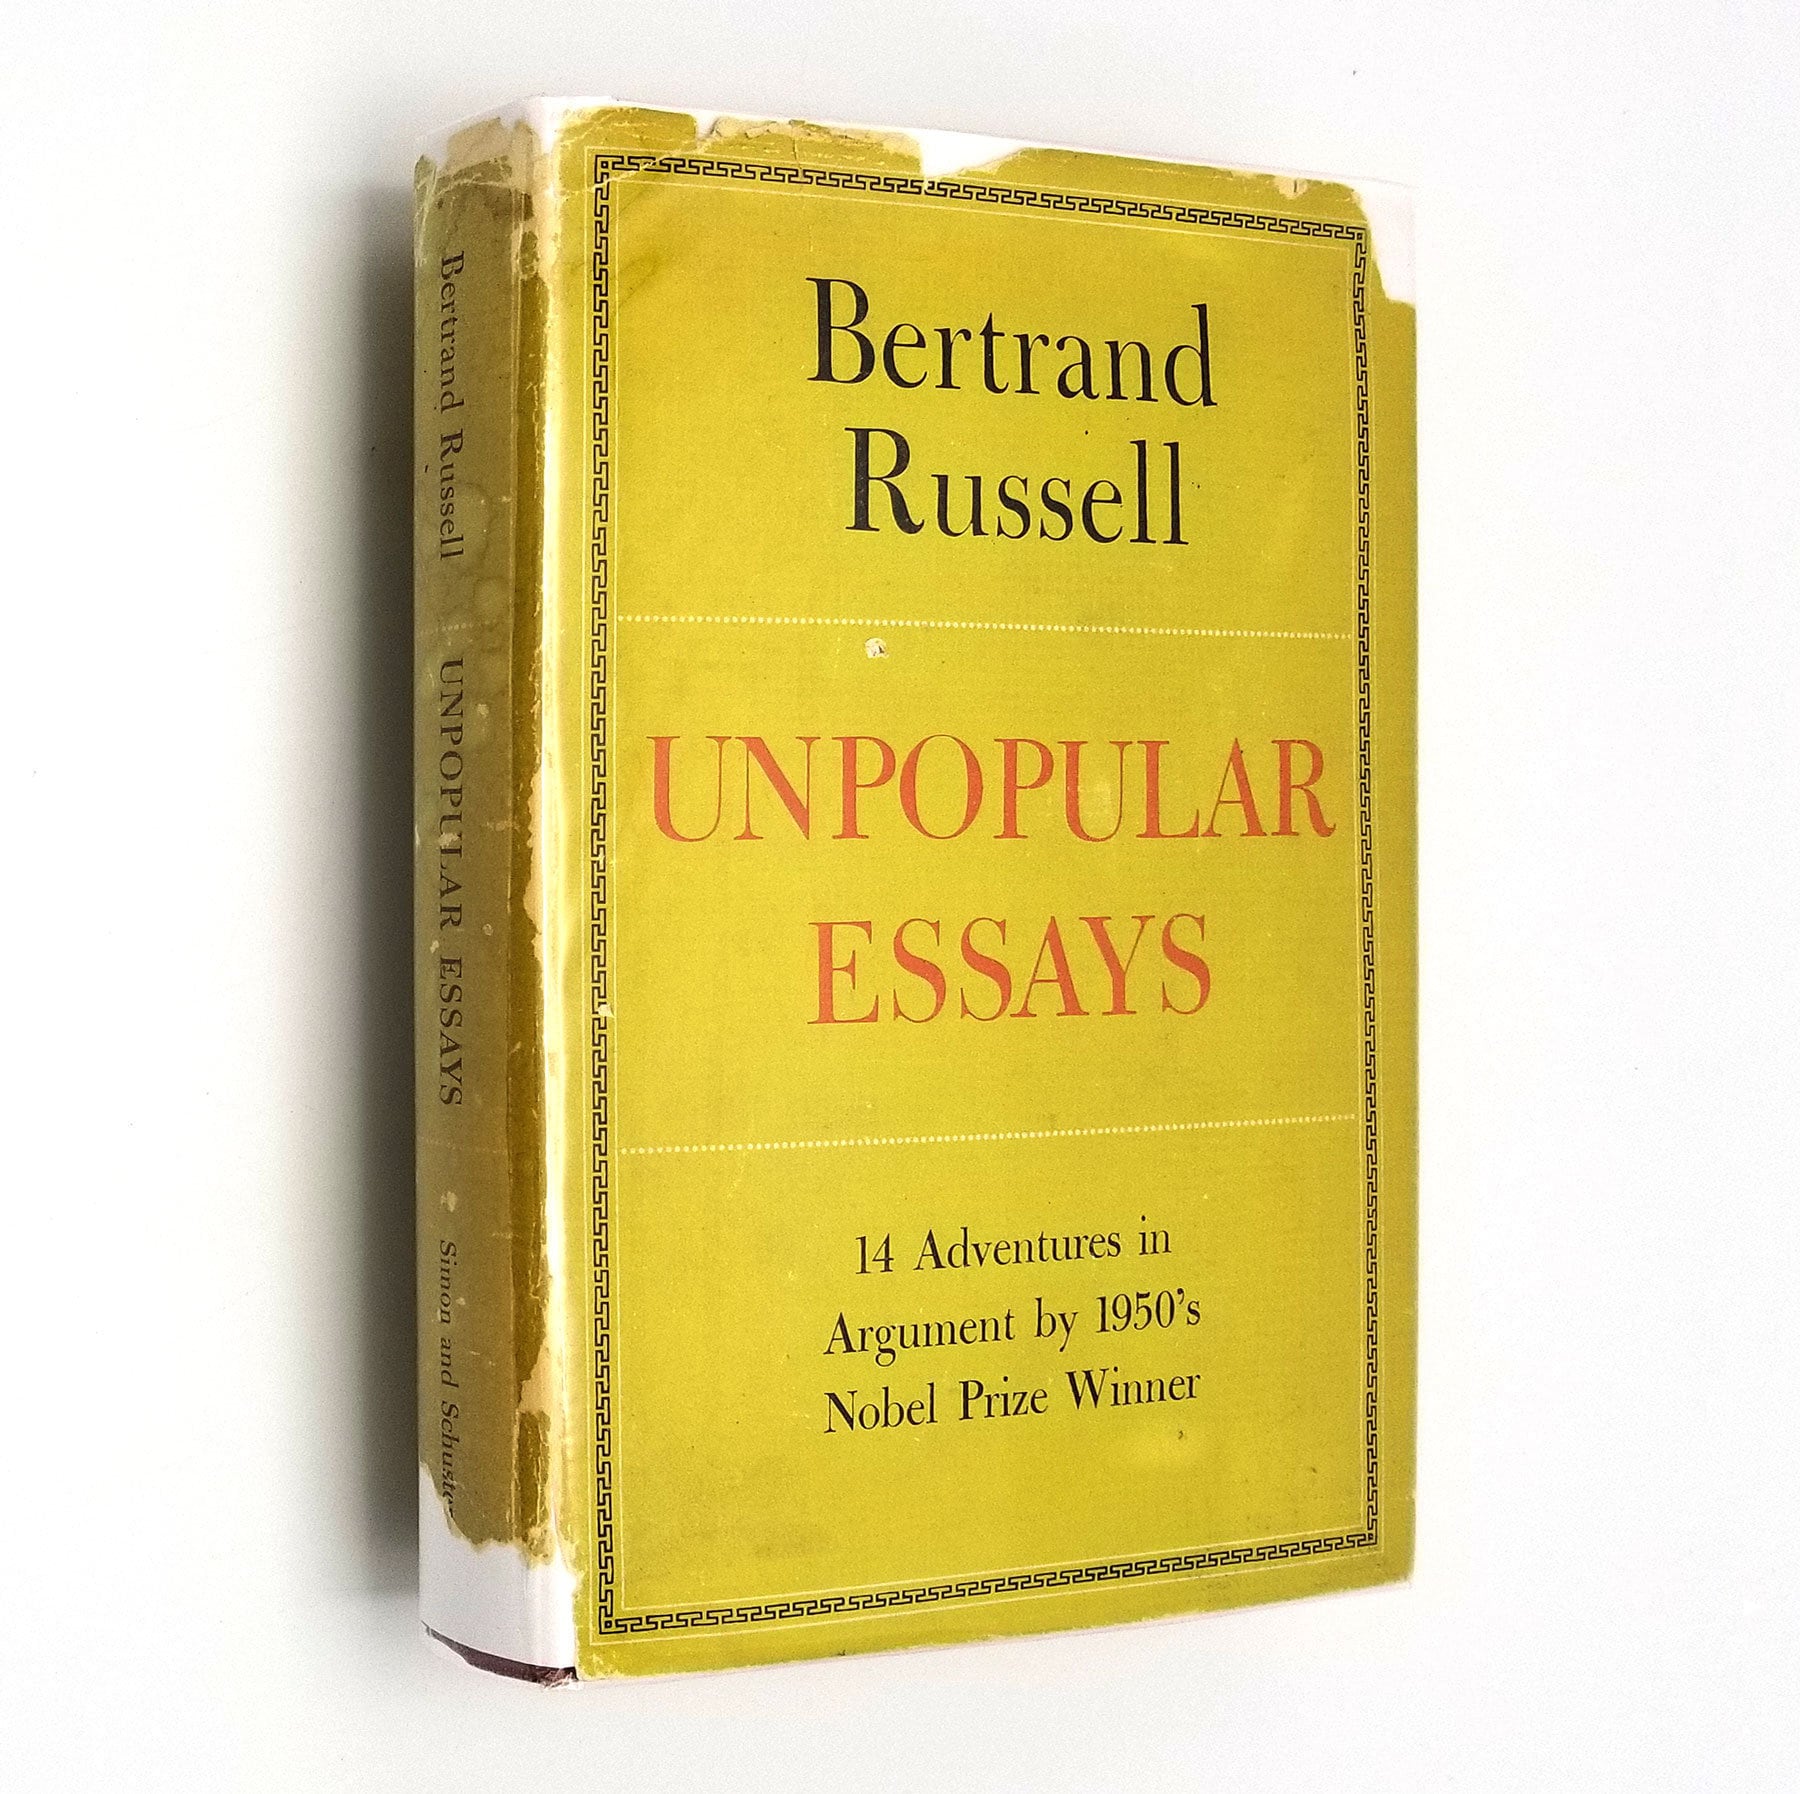 bertrand russell unpopular essays pdf free download